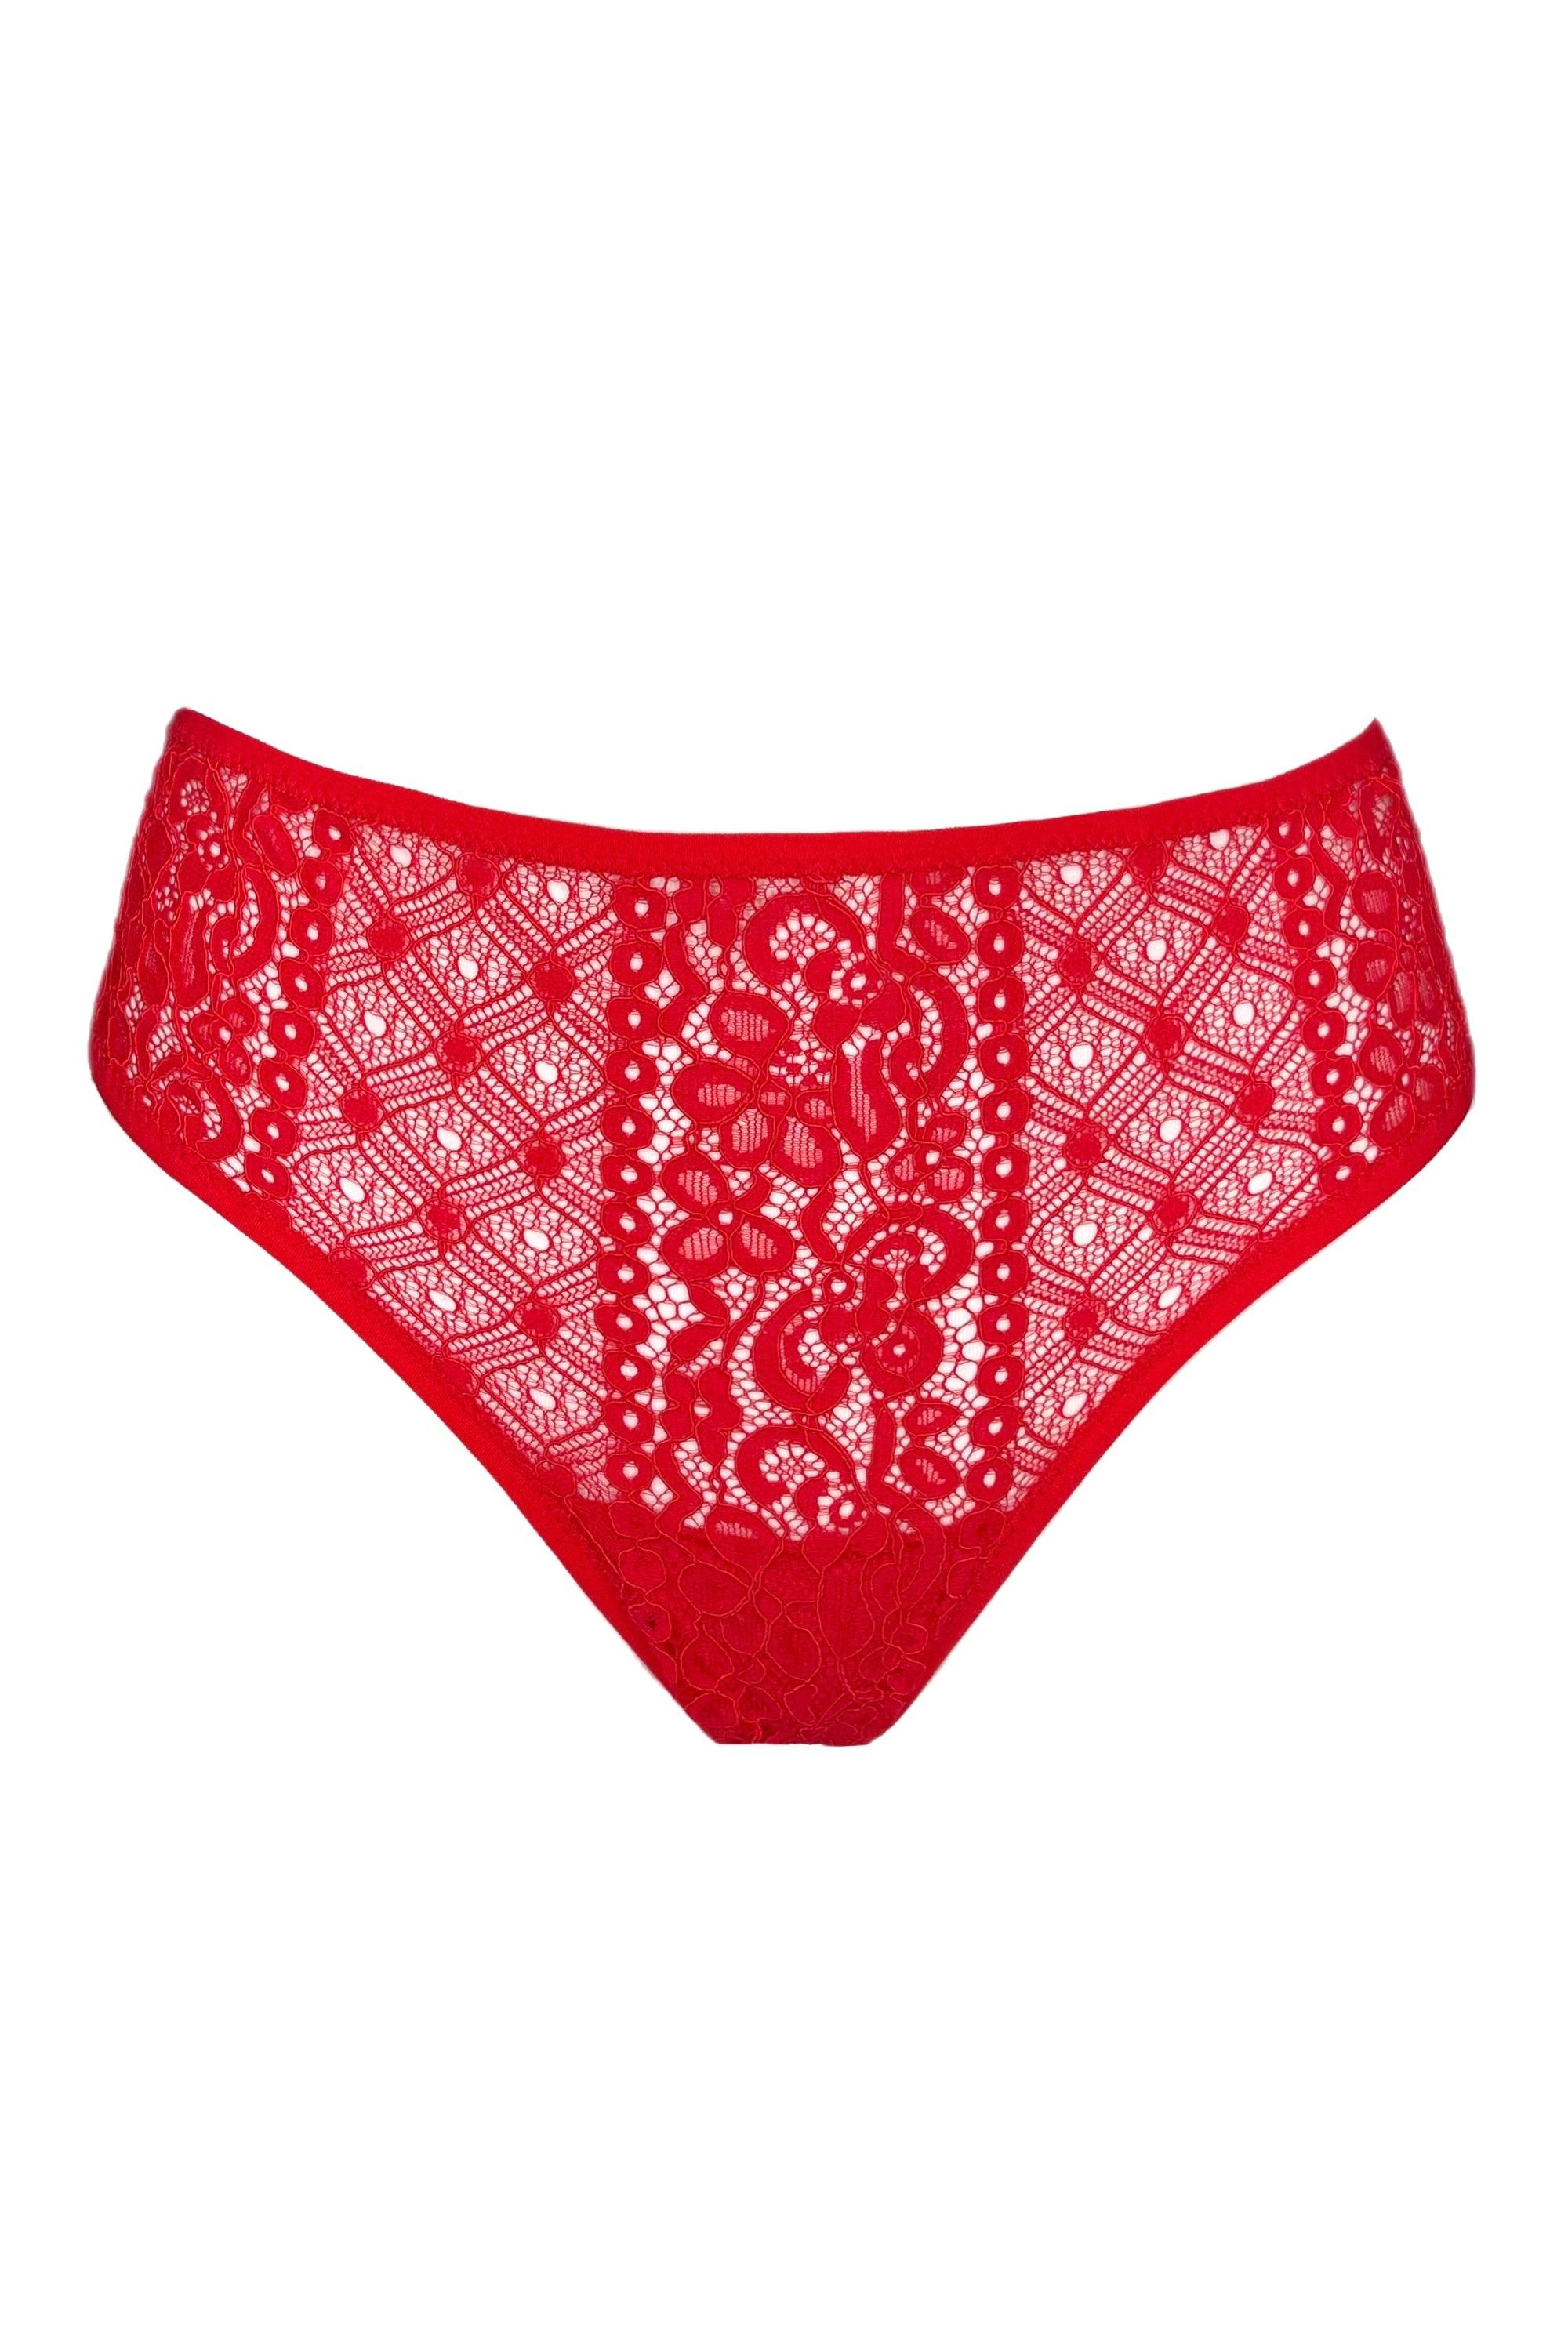 Paulette Red high-waisted thongs - yesUndress